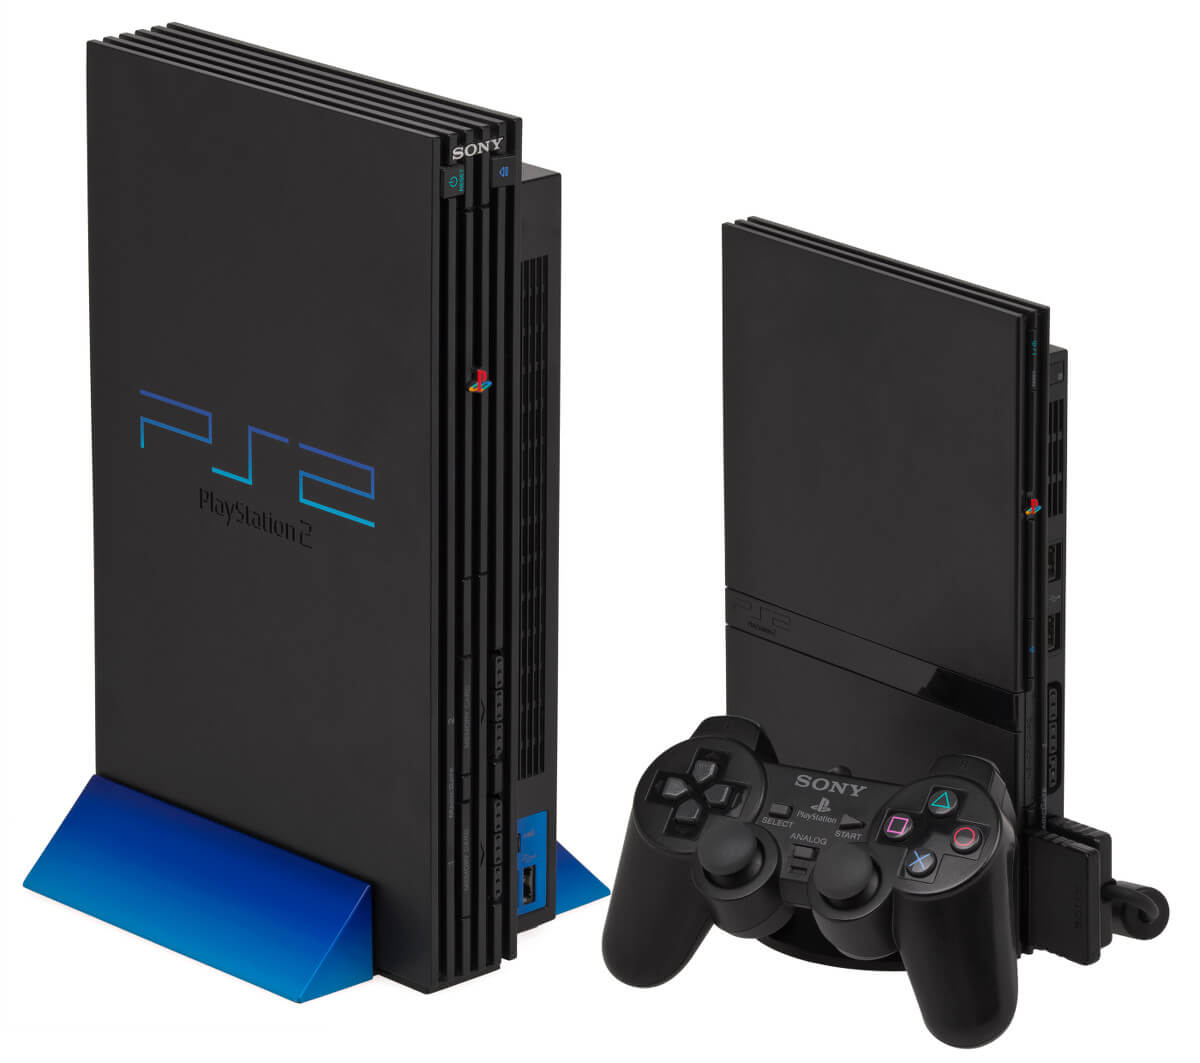 Modelos do PlayStation 2